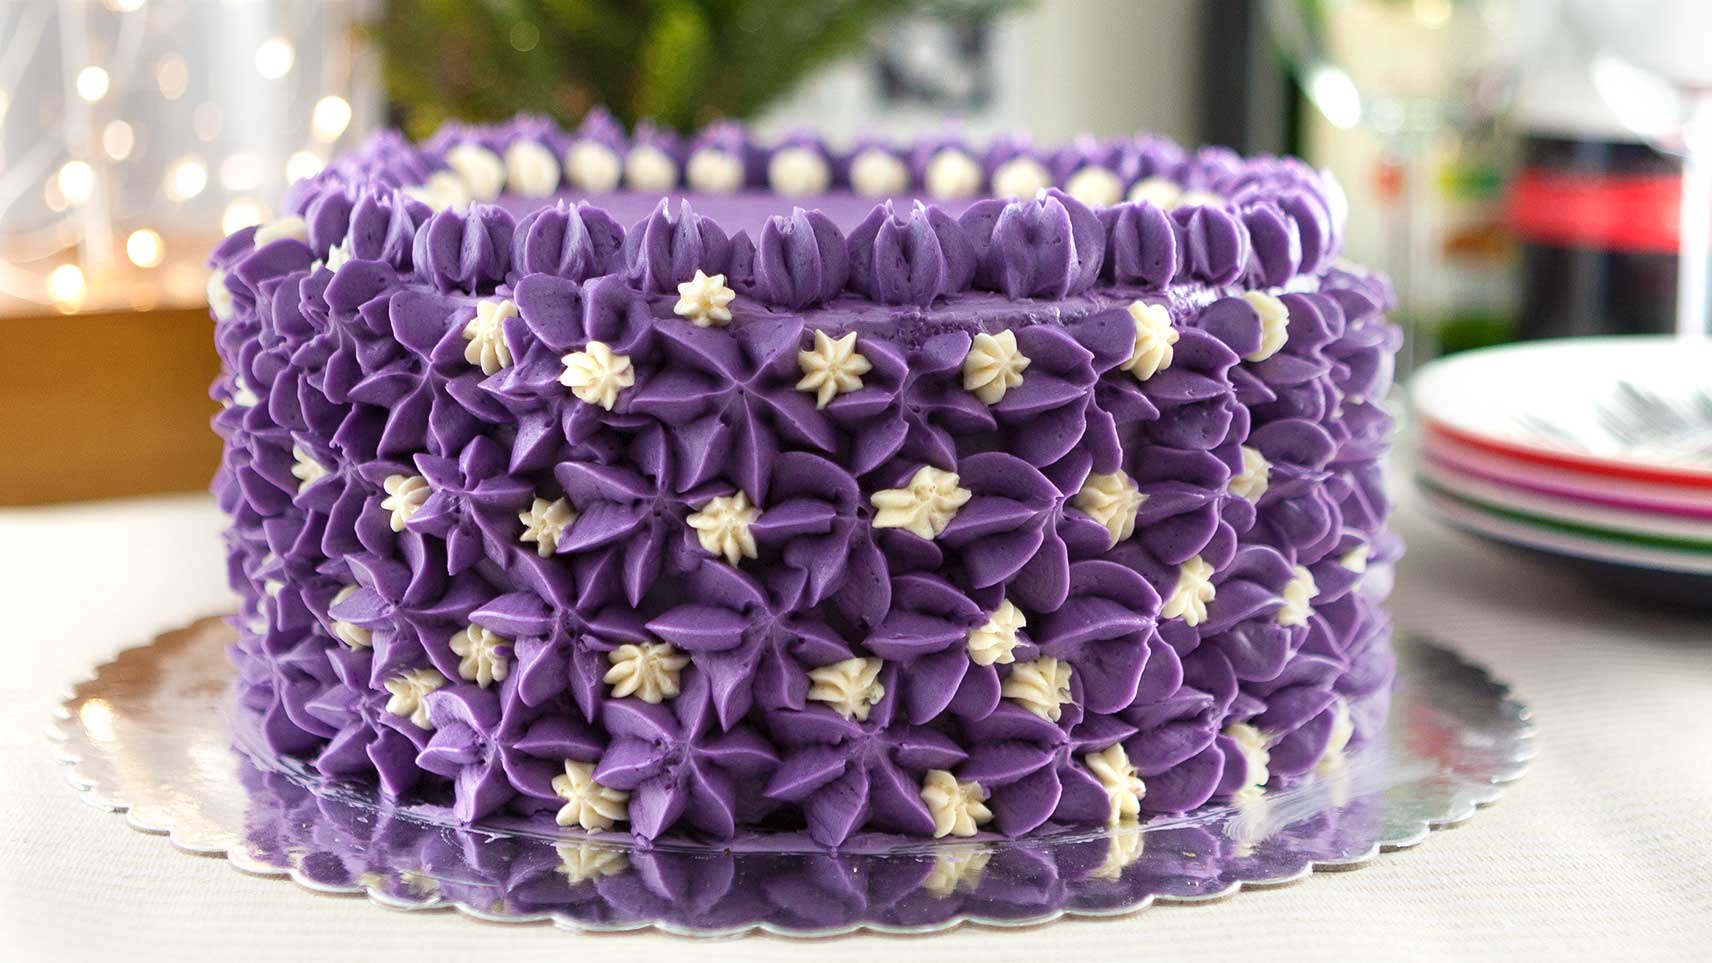 Violet - Flower Cake • Fantasy Cakes, Floral Cakes • Creme Maison Bakery  Singapore